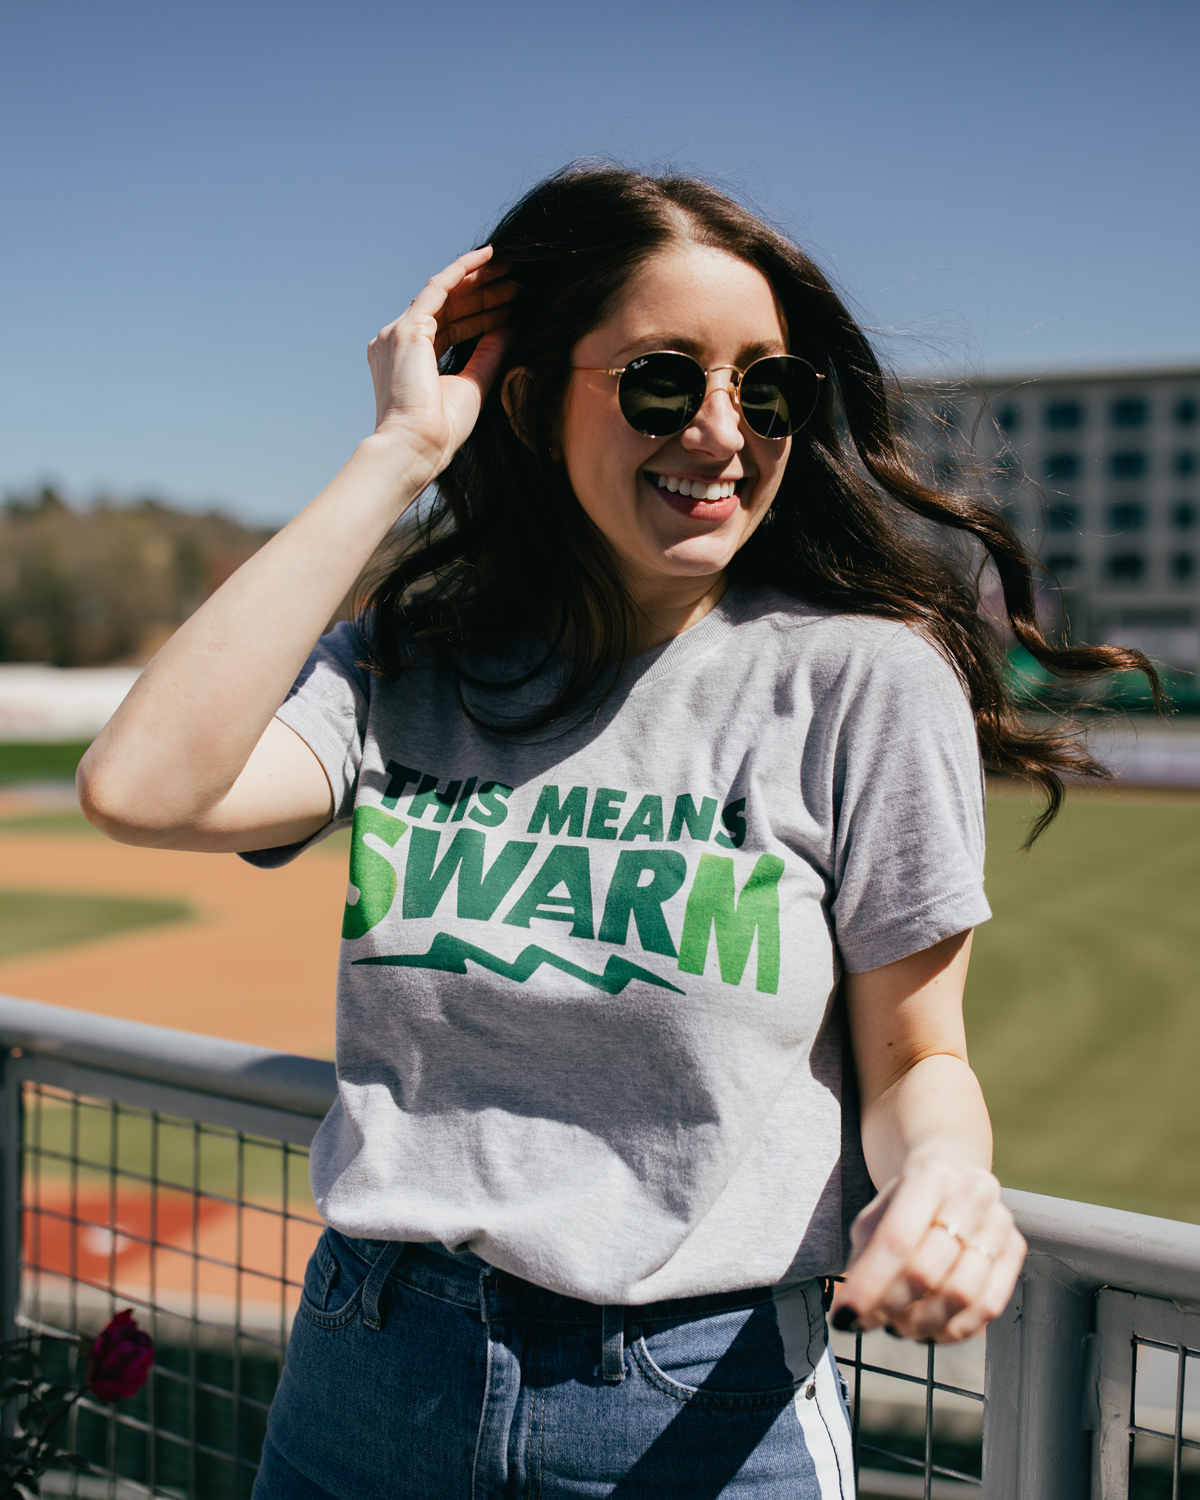 Woman wearing gray Augusta Green Jackets Swarm shirt and smiling at the ballpark